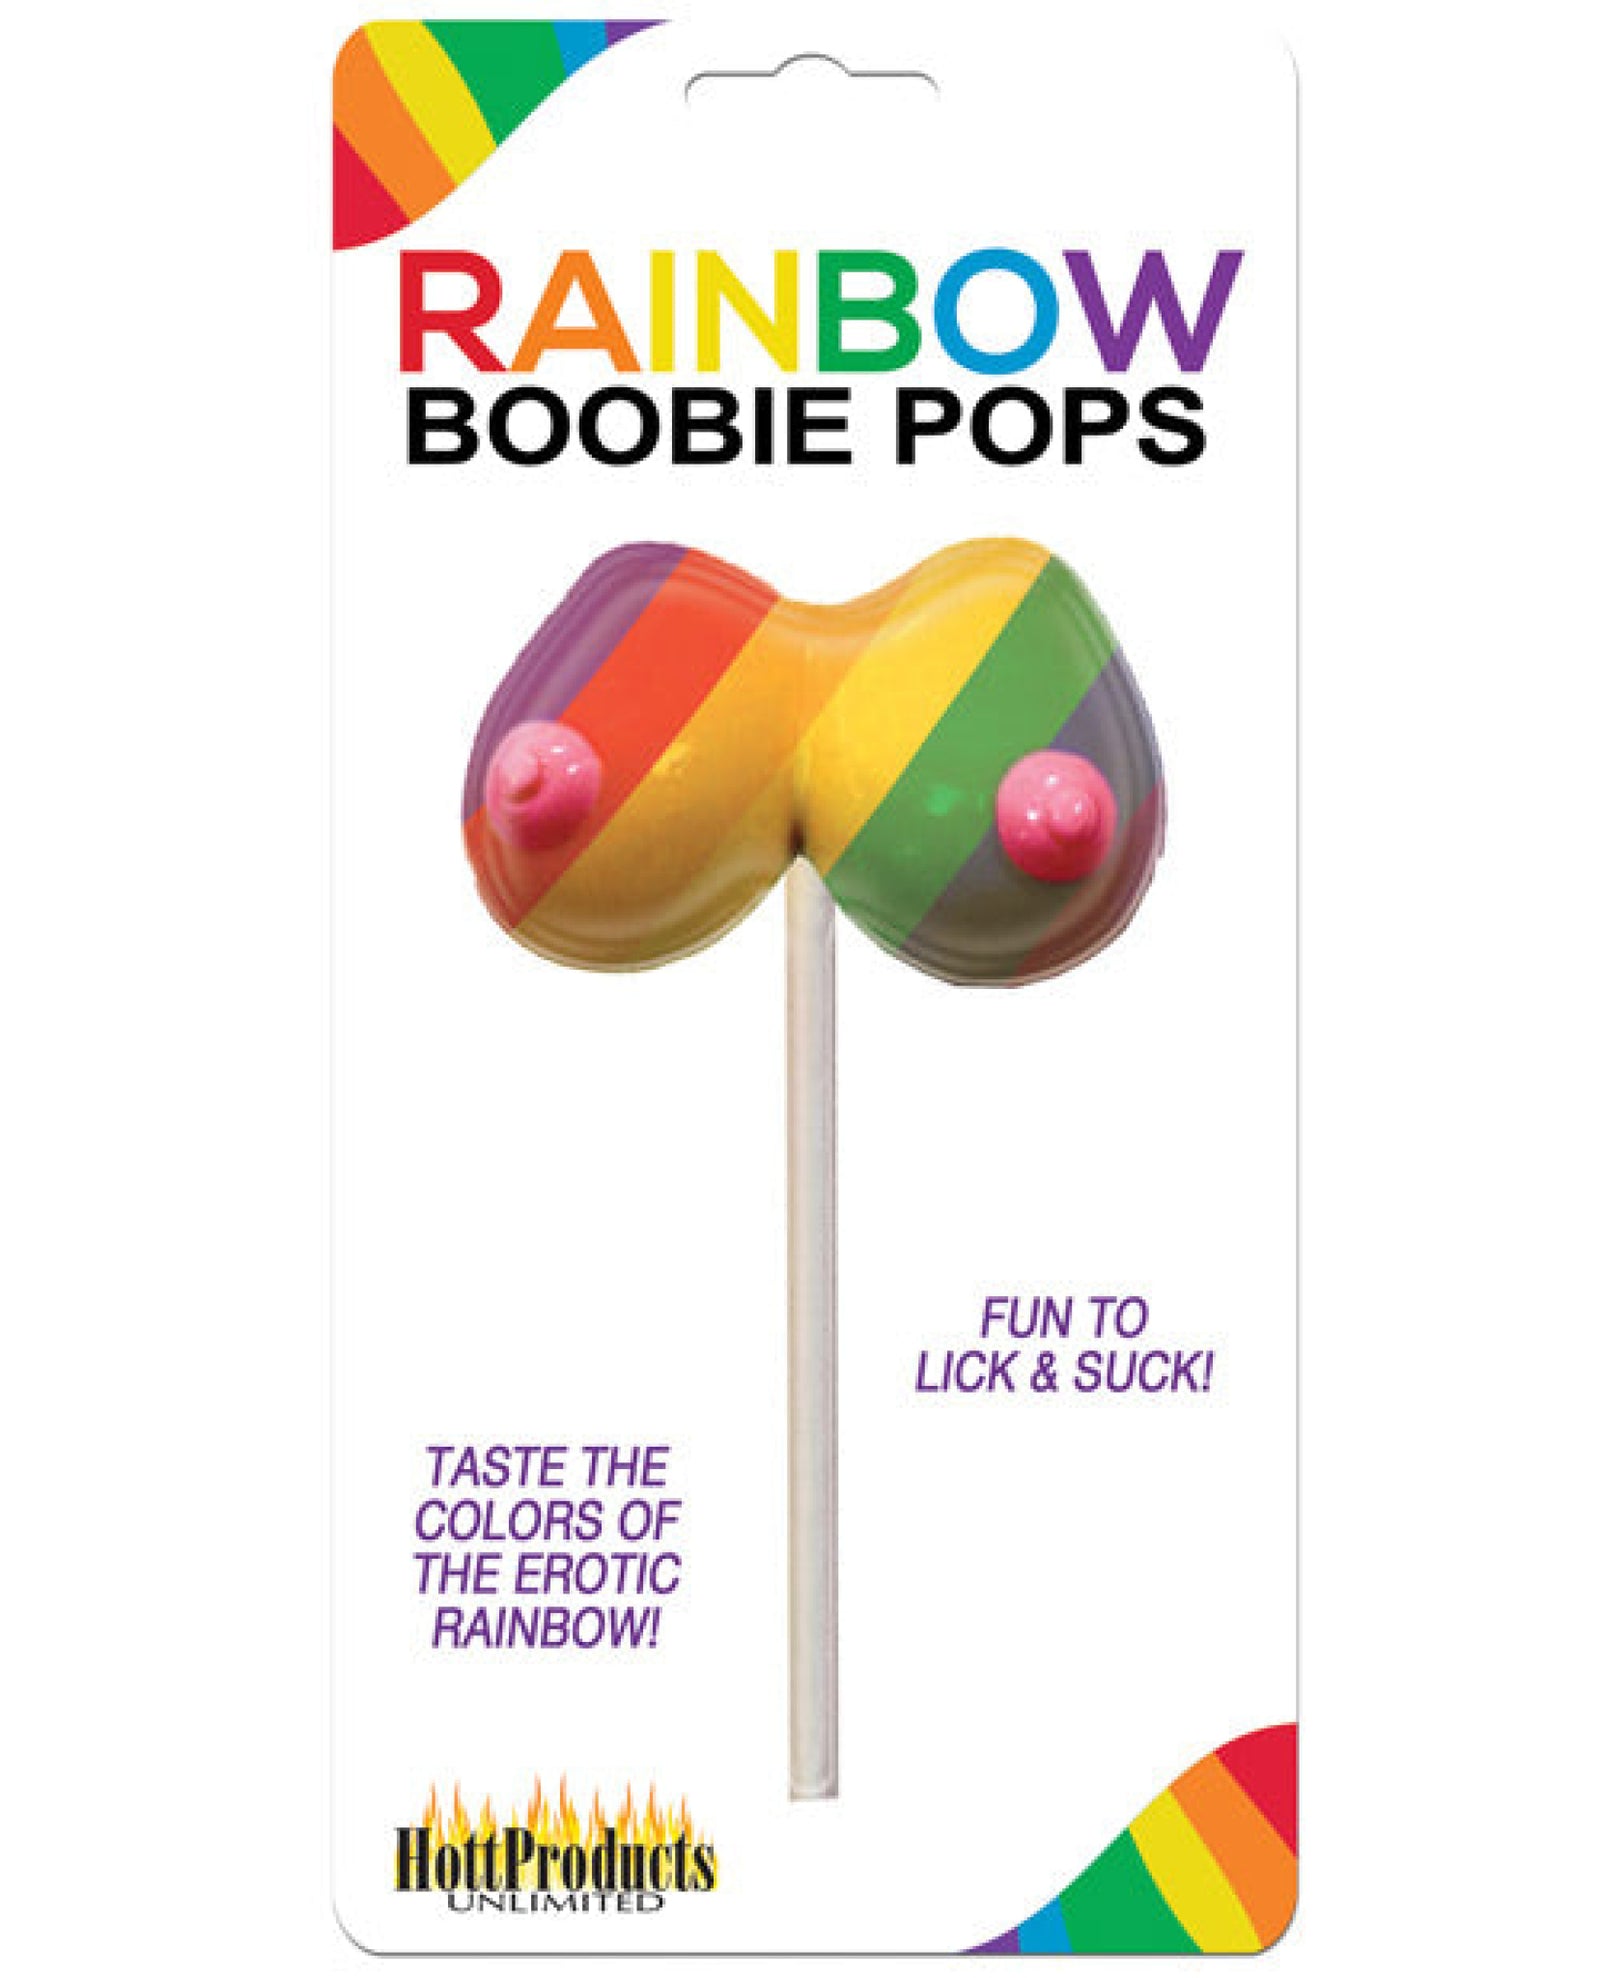 Rainbow Boobie Pops - Rainbow Hott Products